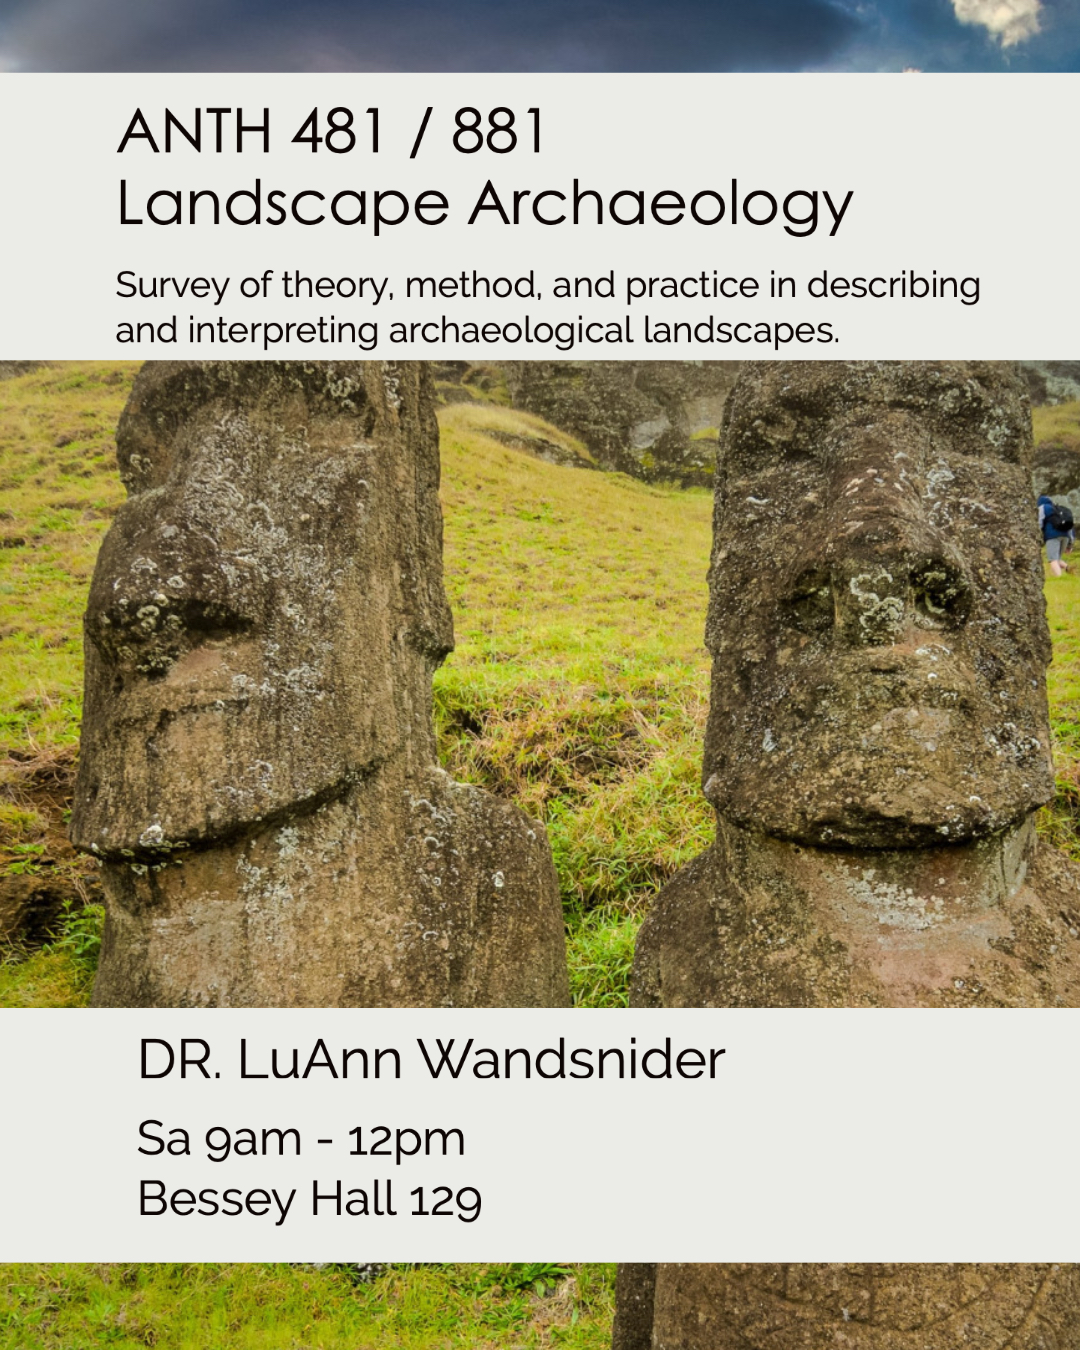 ANTH 481/881: Landscape Archaeology